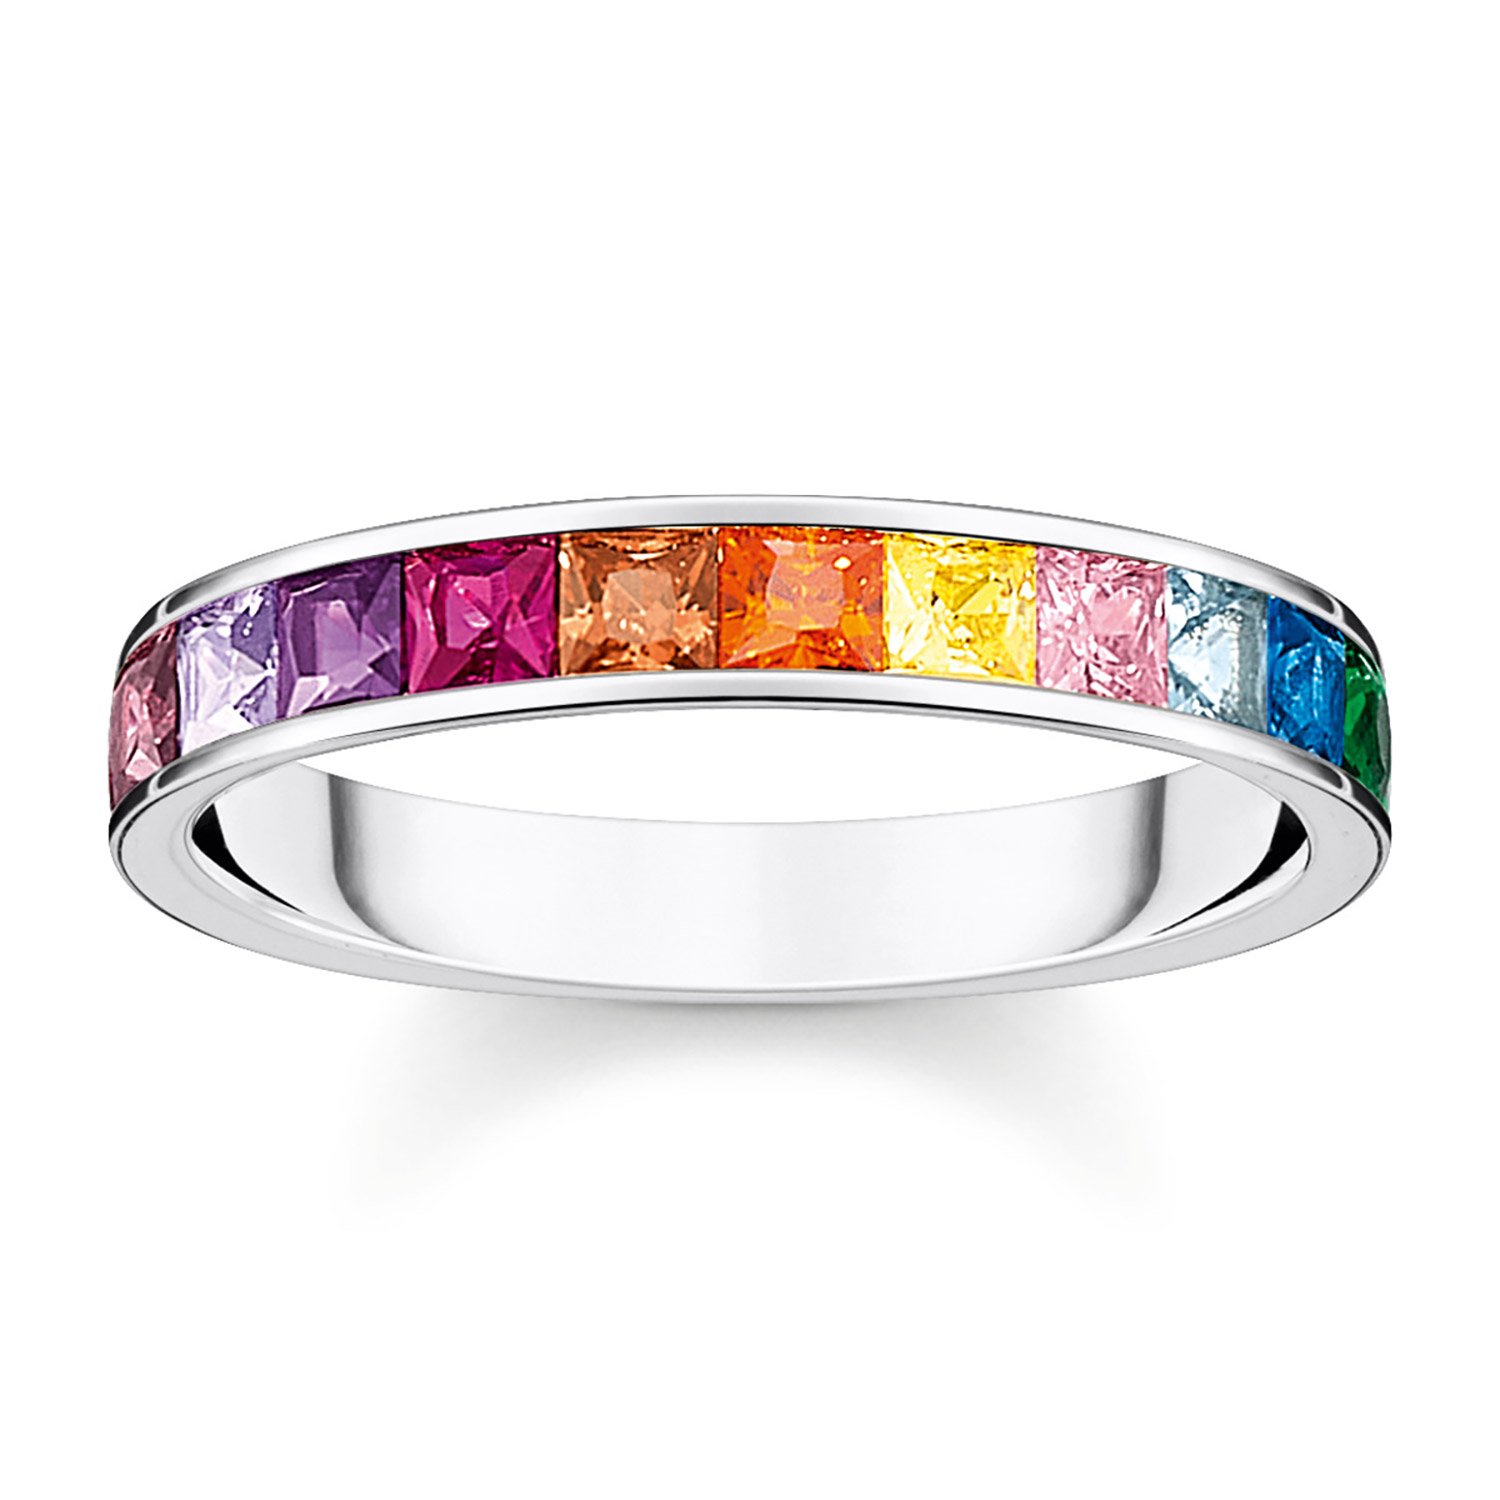 Thomas Sabo Ladies' Ring Silver Colourful Stones TR2403-477-7 • uhrcenter